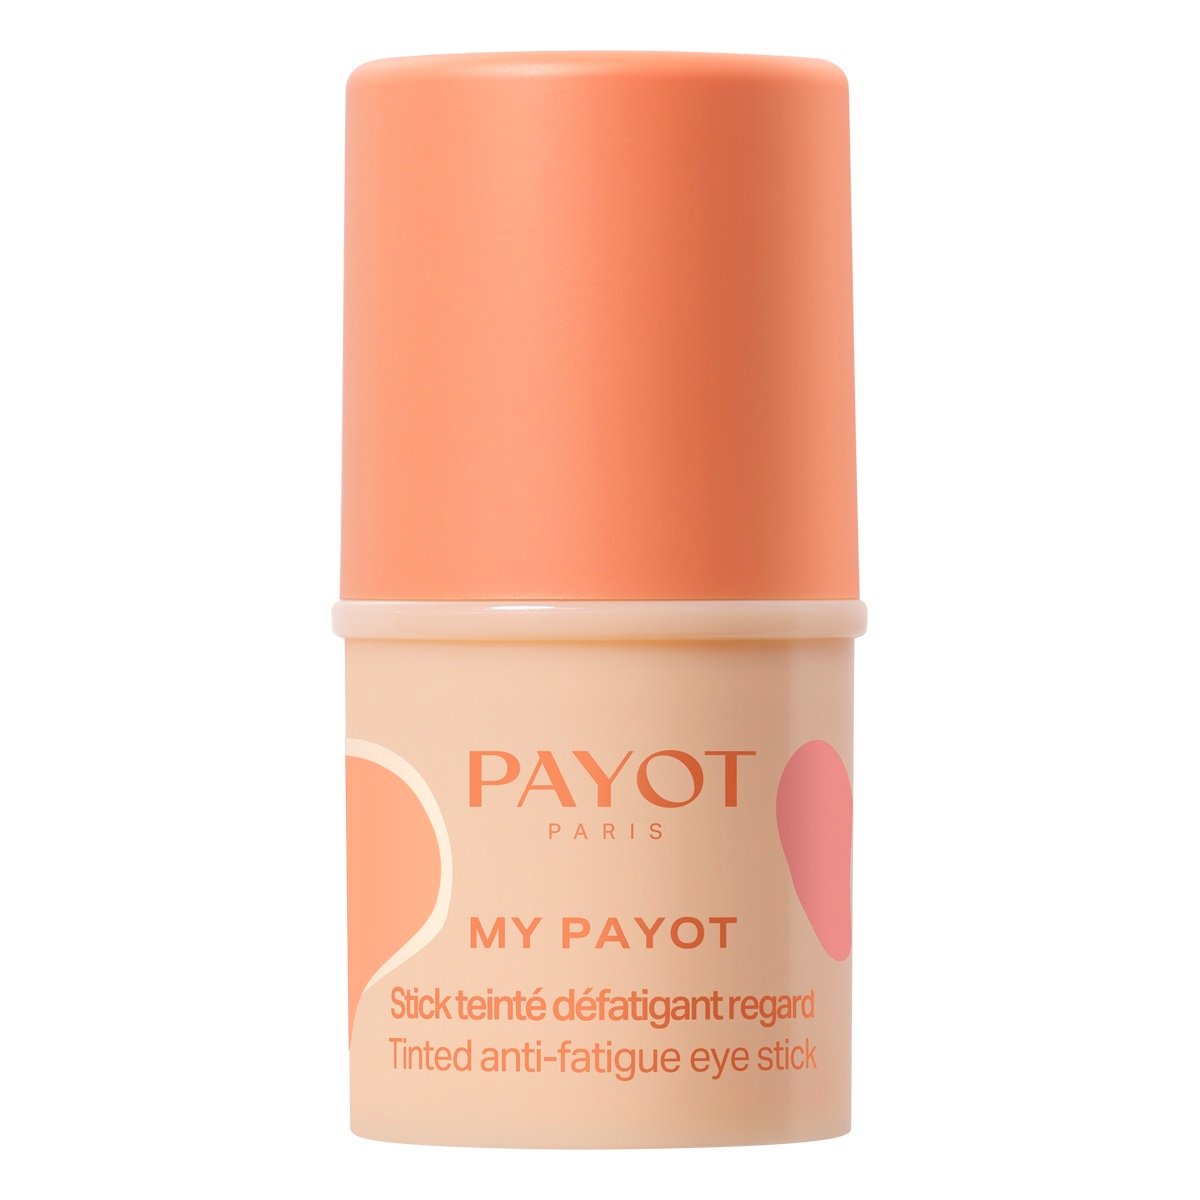 Payot - My Payot Glow Eye Gel 4,5 g